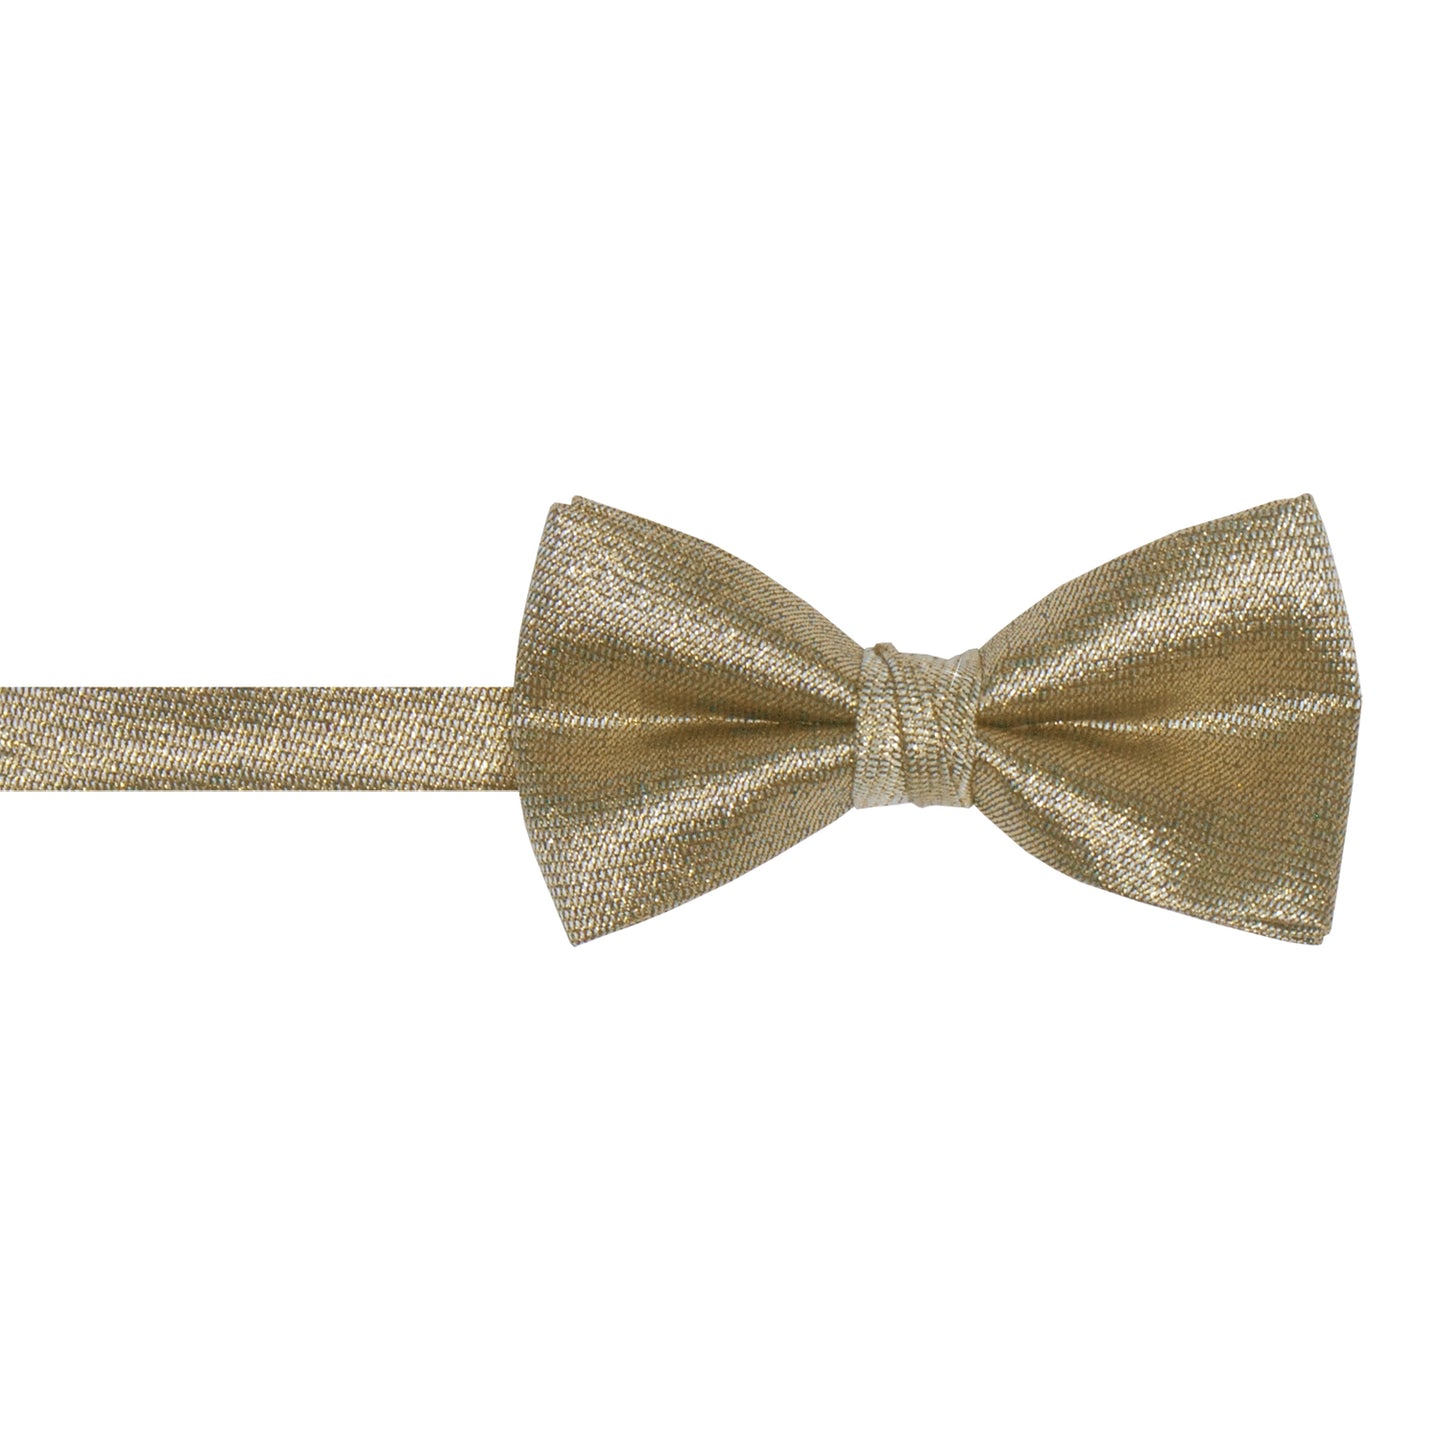 Metallic Gold Bow Tie